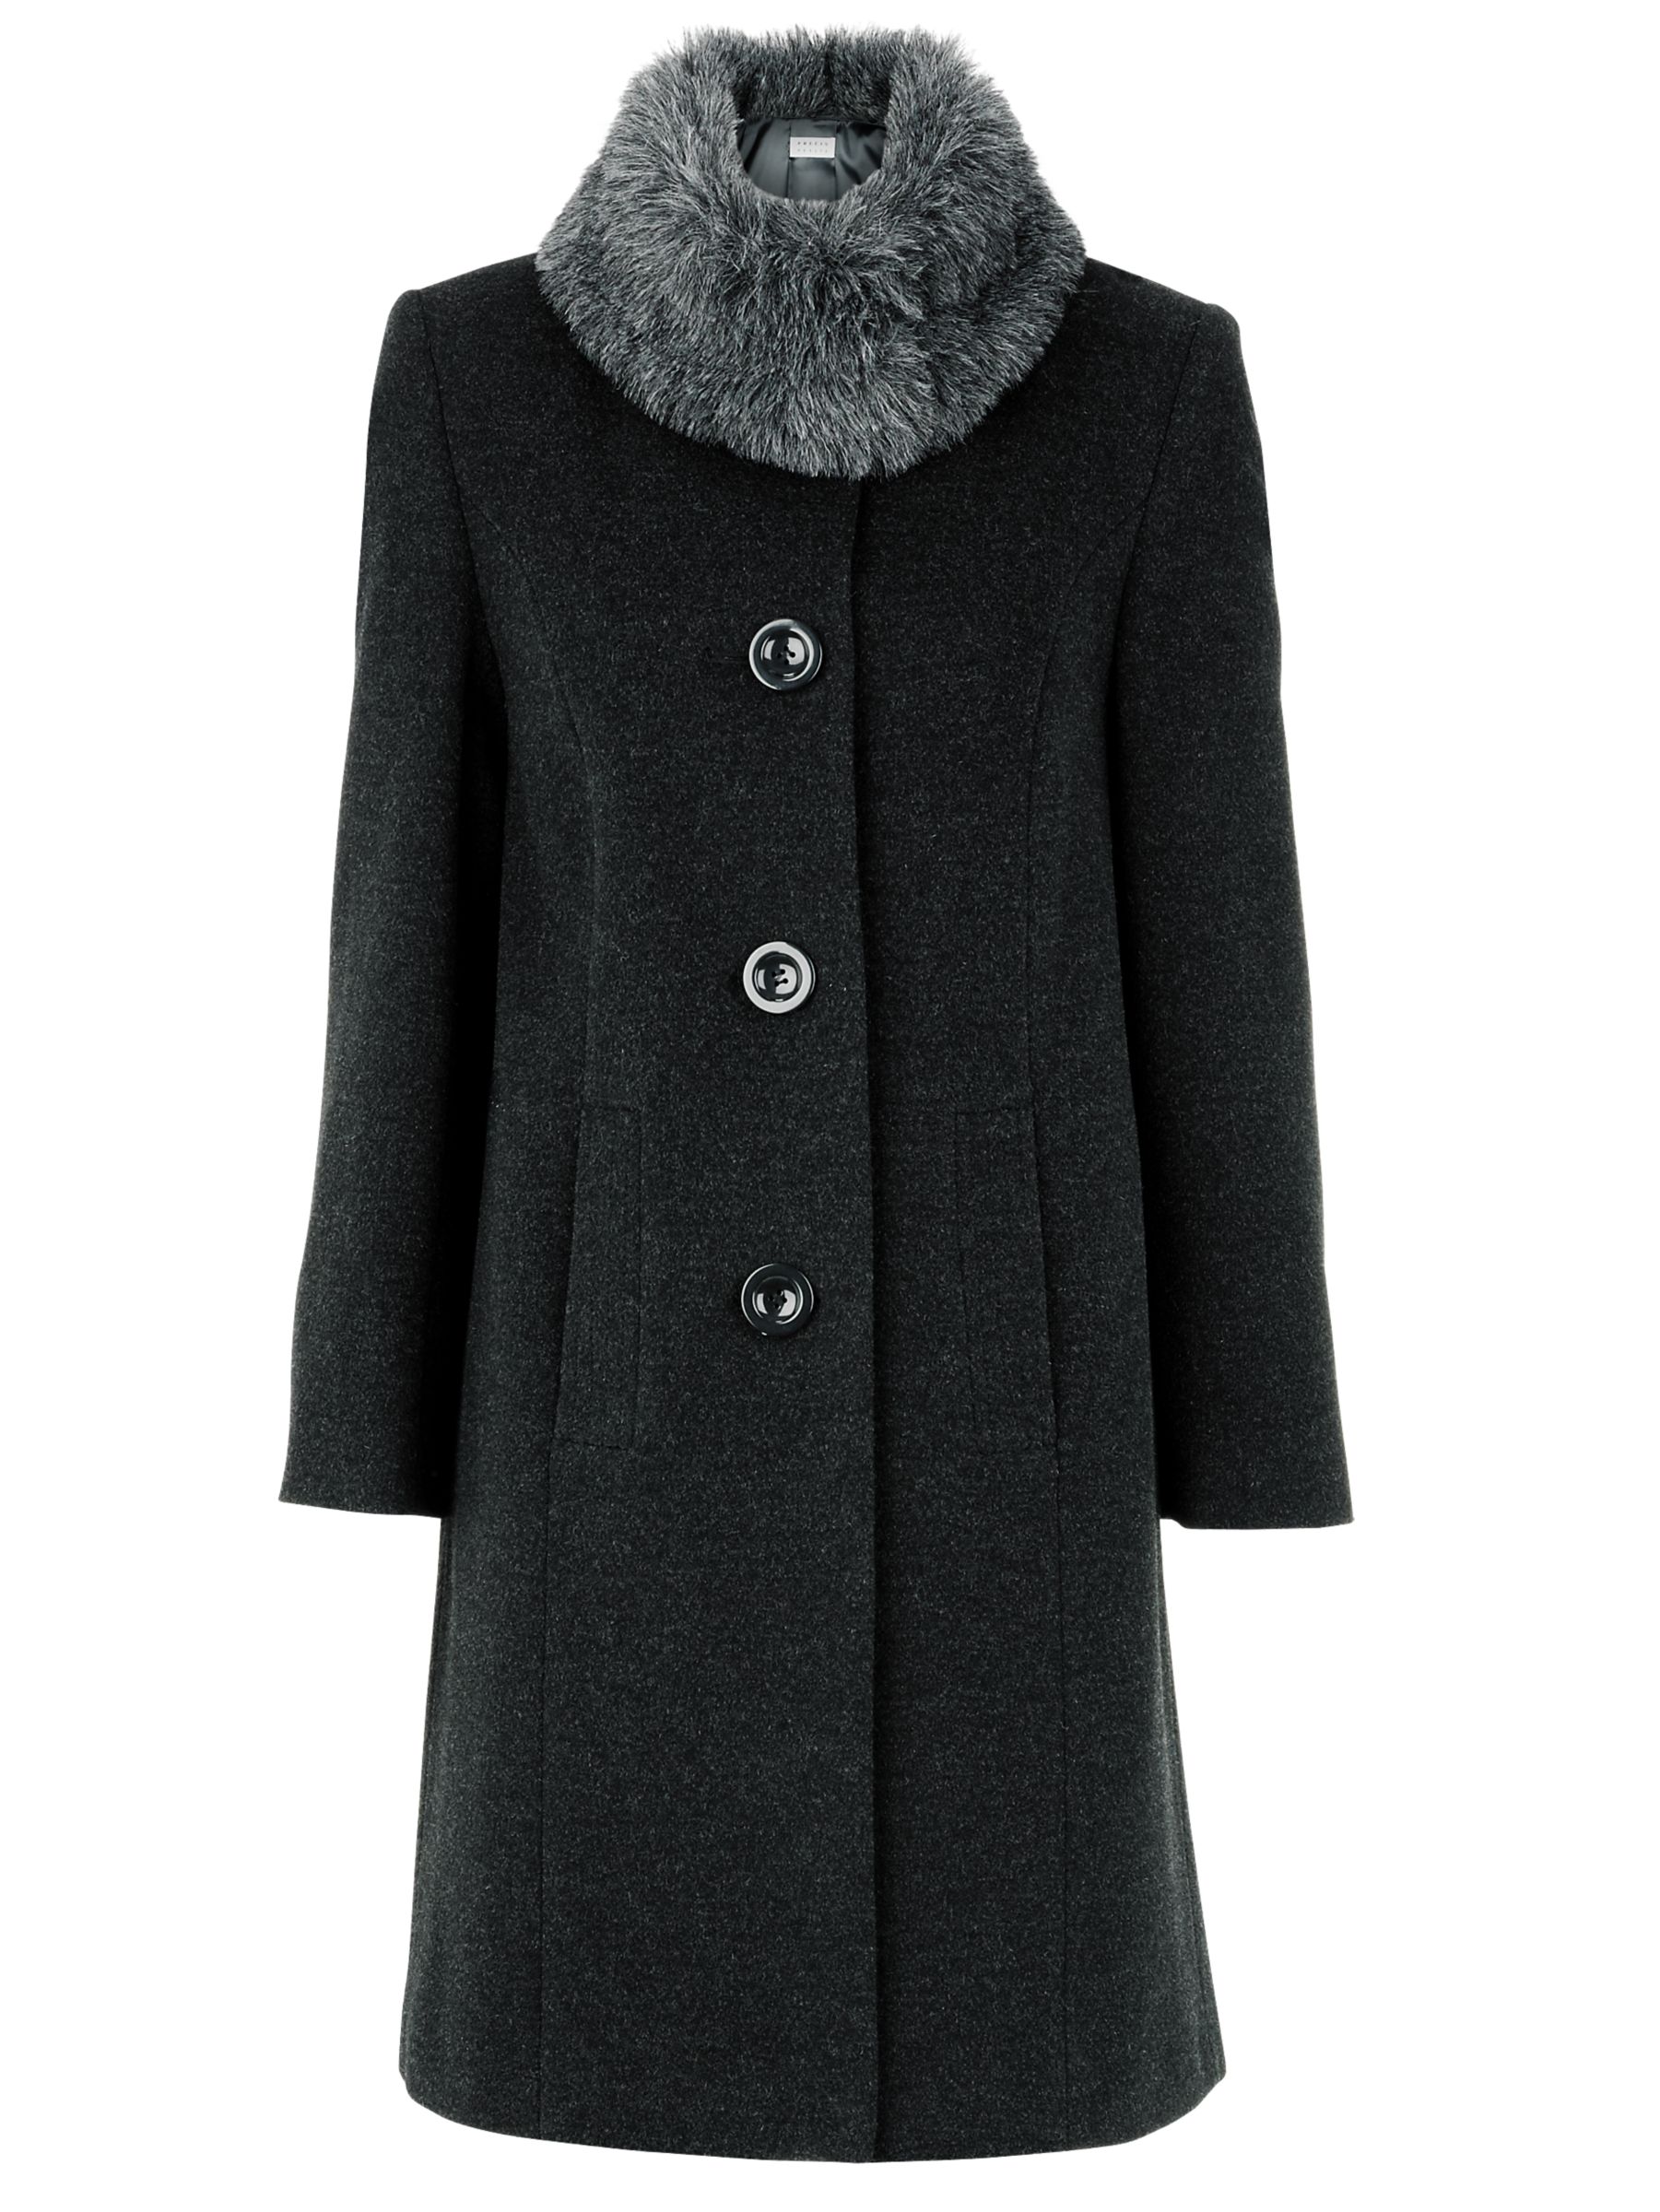 Precis Petite Fur Collar 3/4 Length Coat, Grey at John Lewis